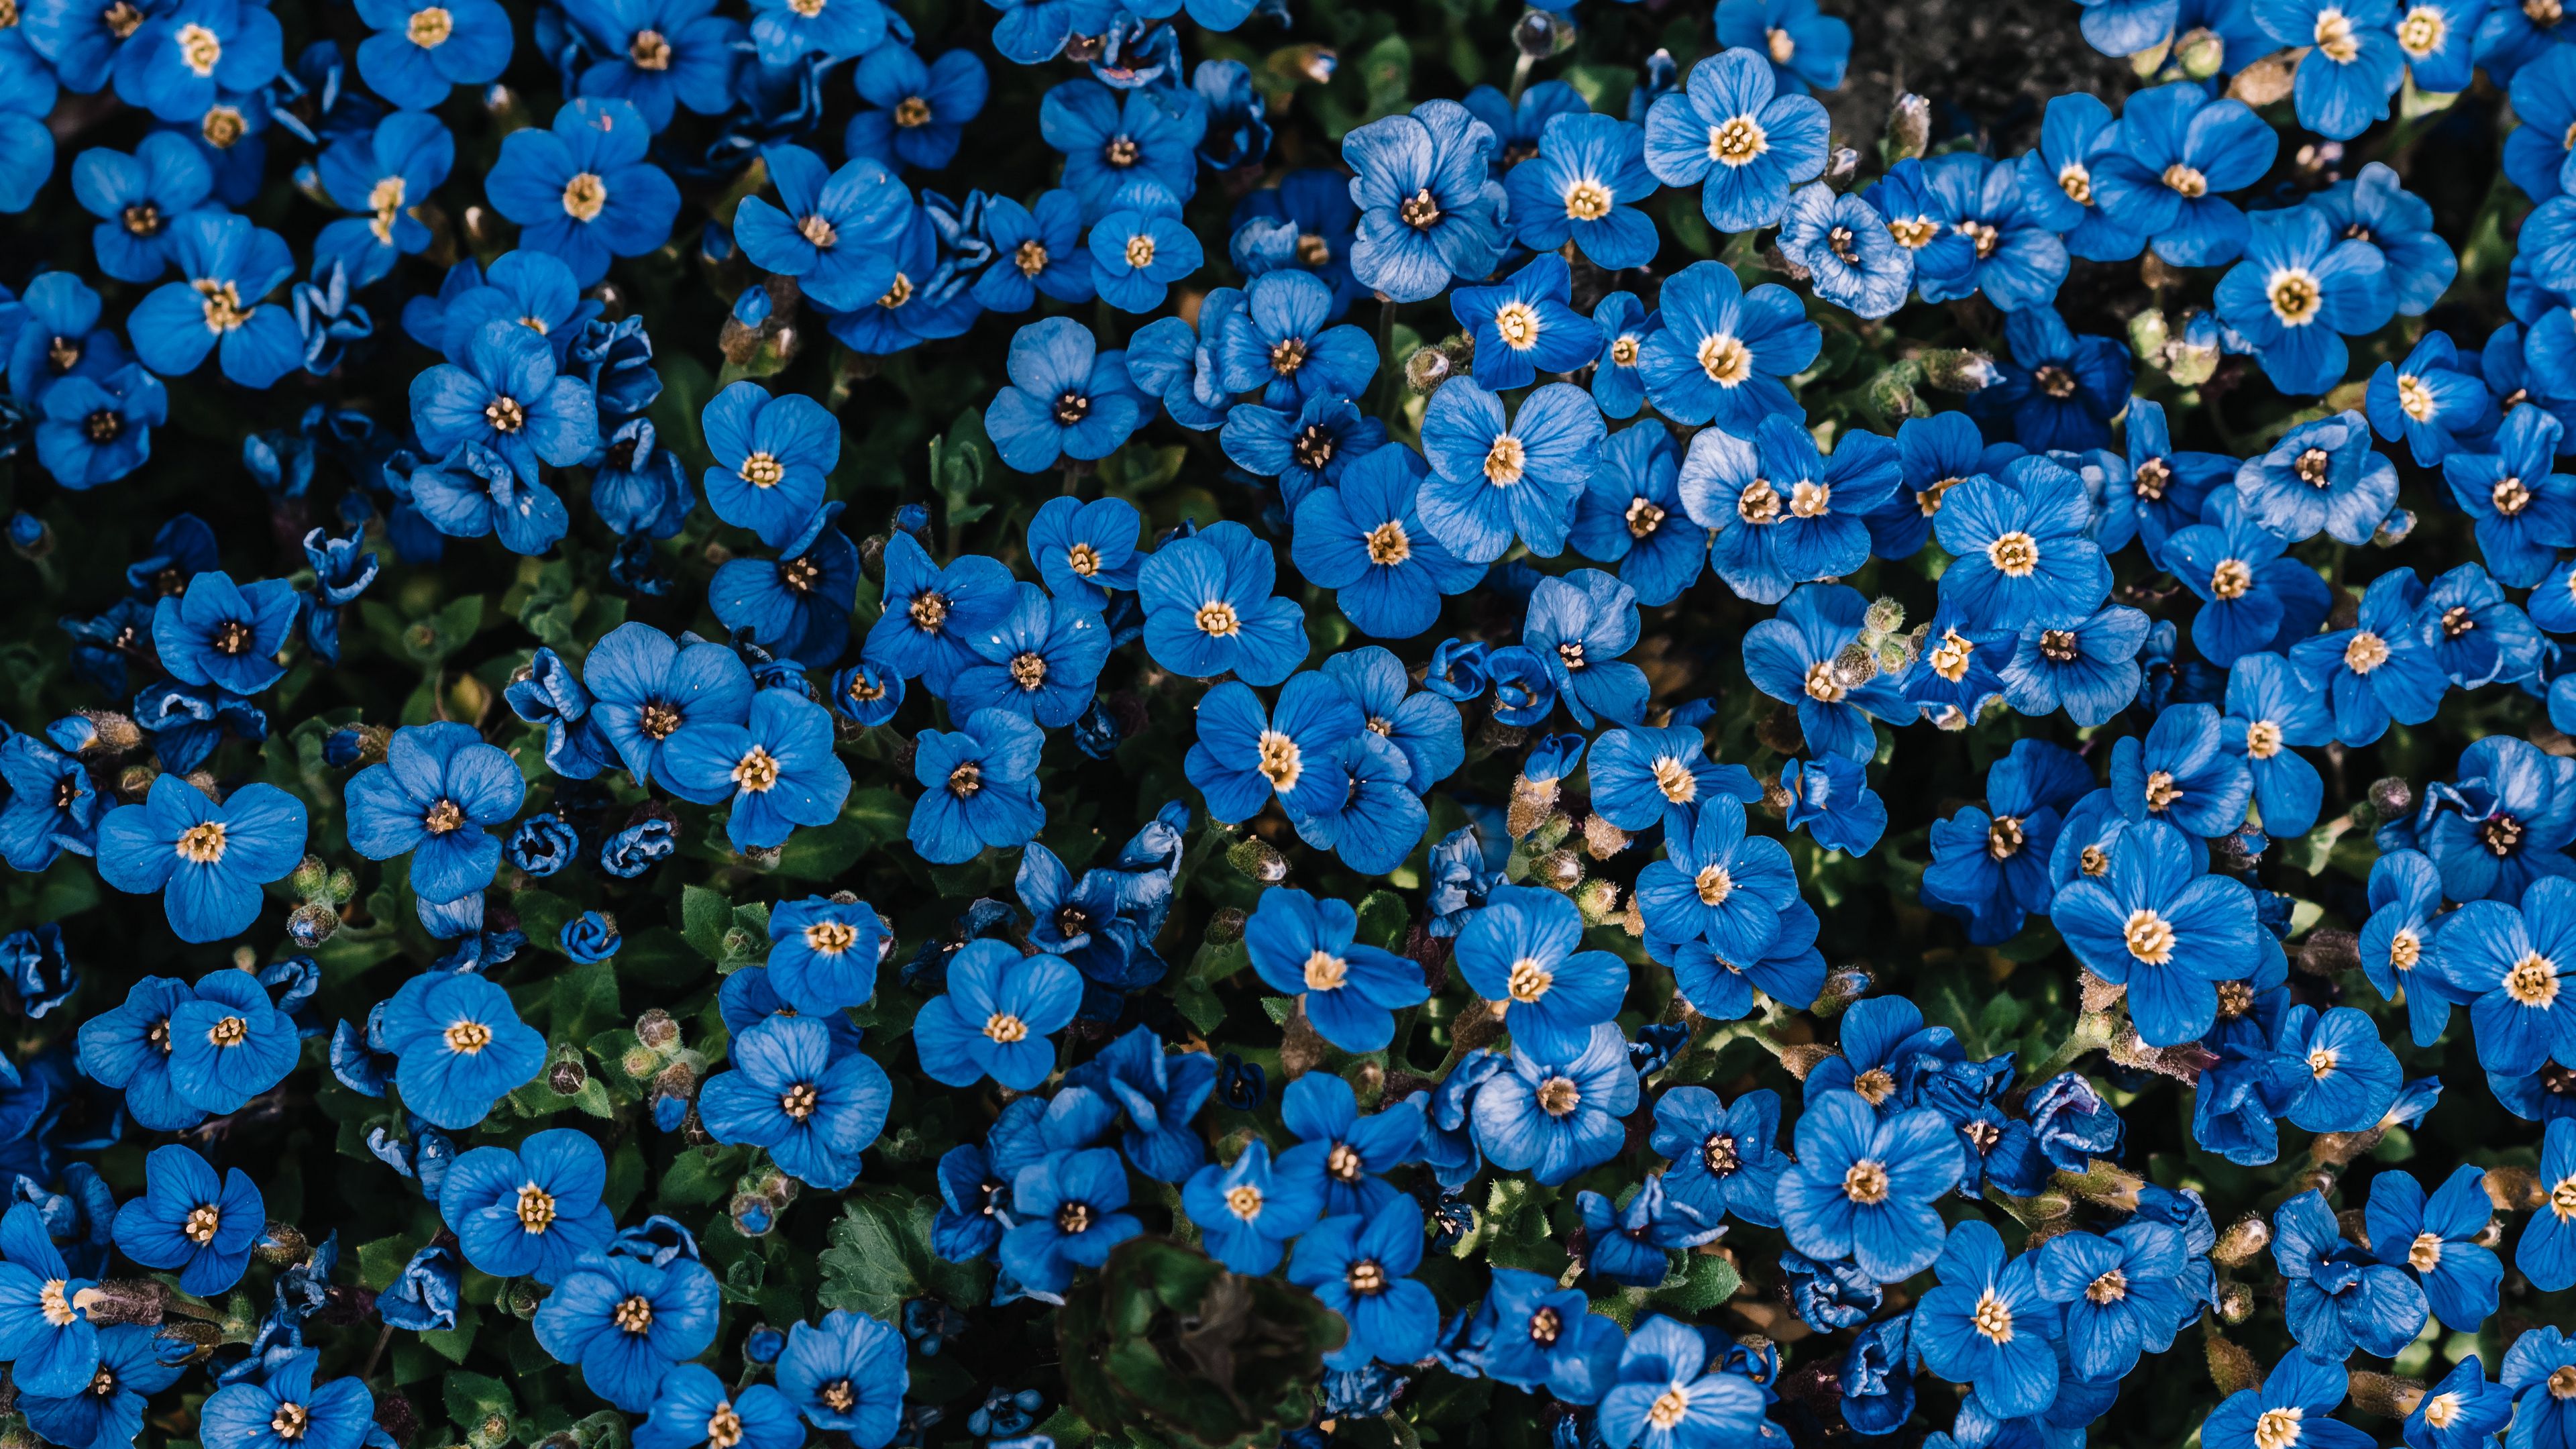 Download wallpaper 3840x2160 flowers, blue, bloom, plant, decorative 4k